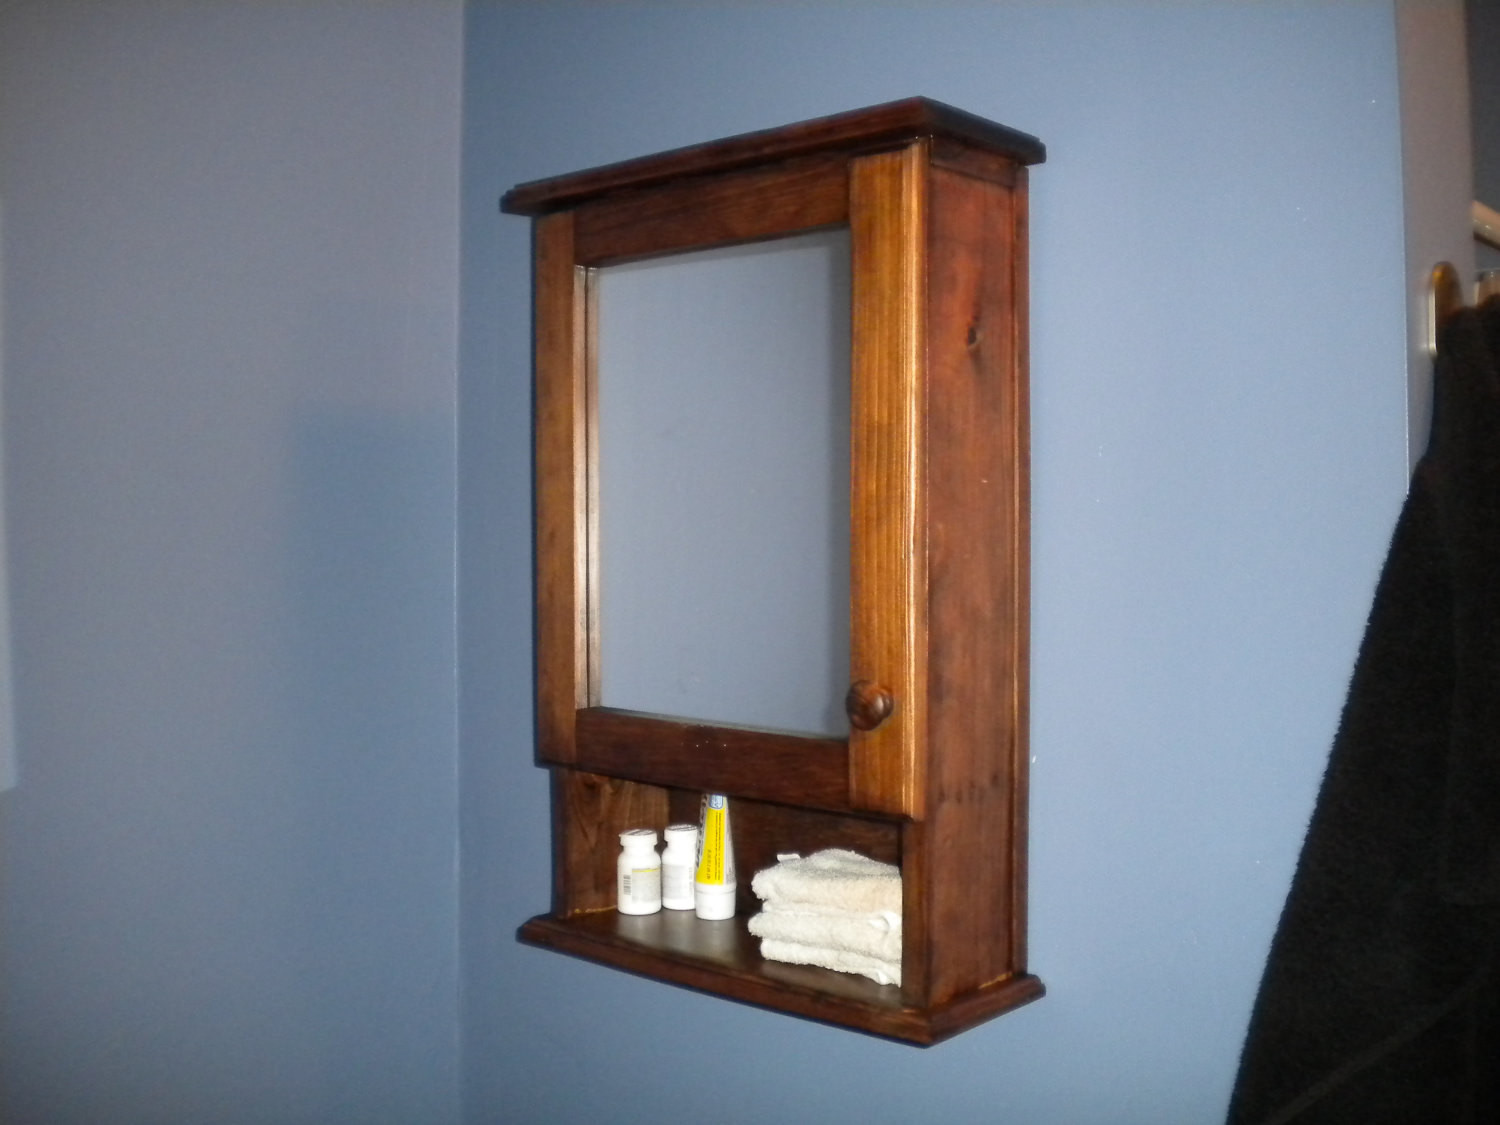 Mirrored Bathroom Medicine Cabinet
 Mirrored bathroom medicine cabinet by RaysCustomWoodwork